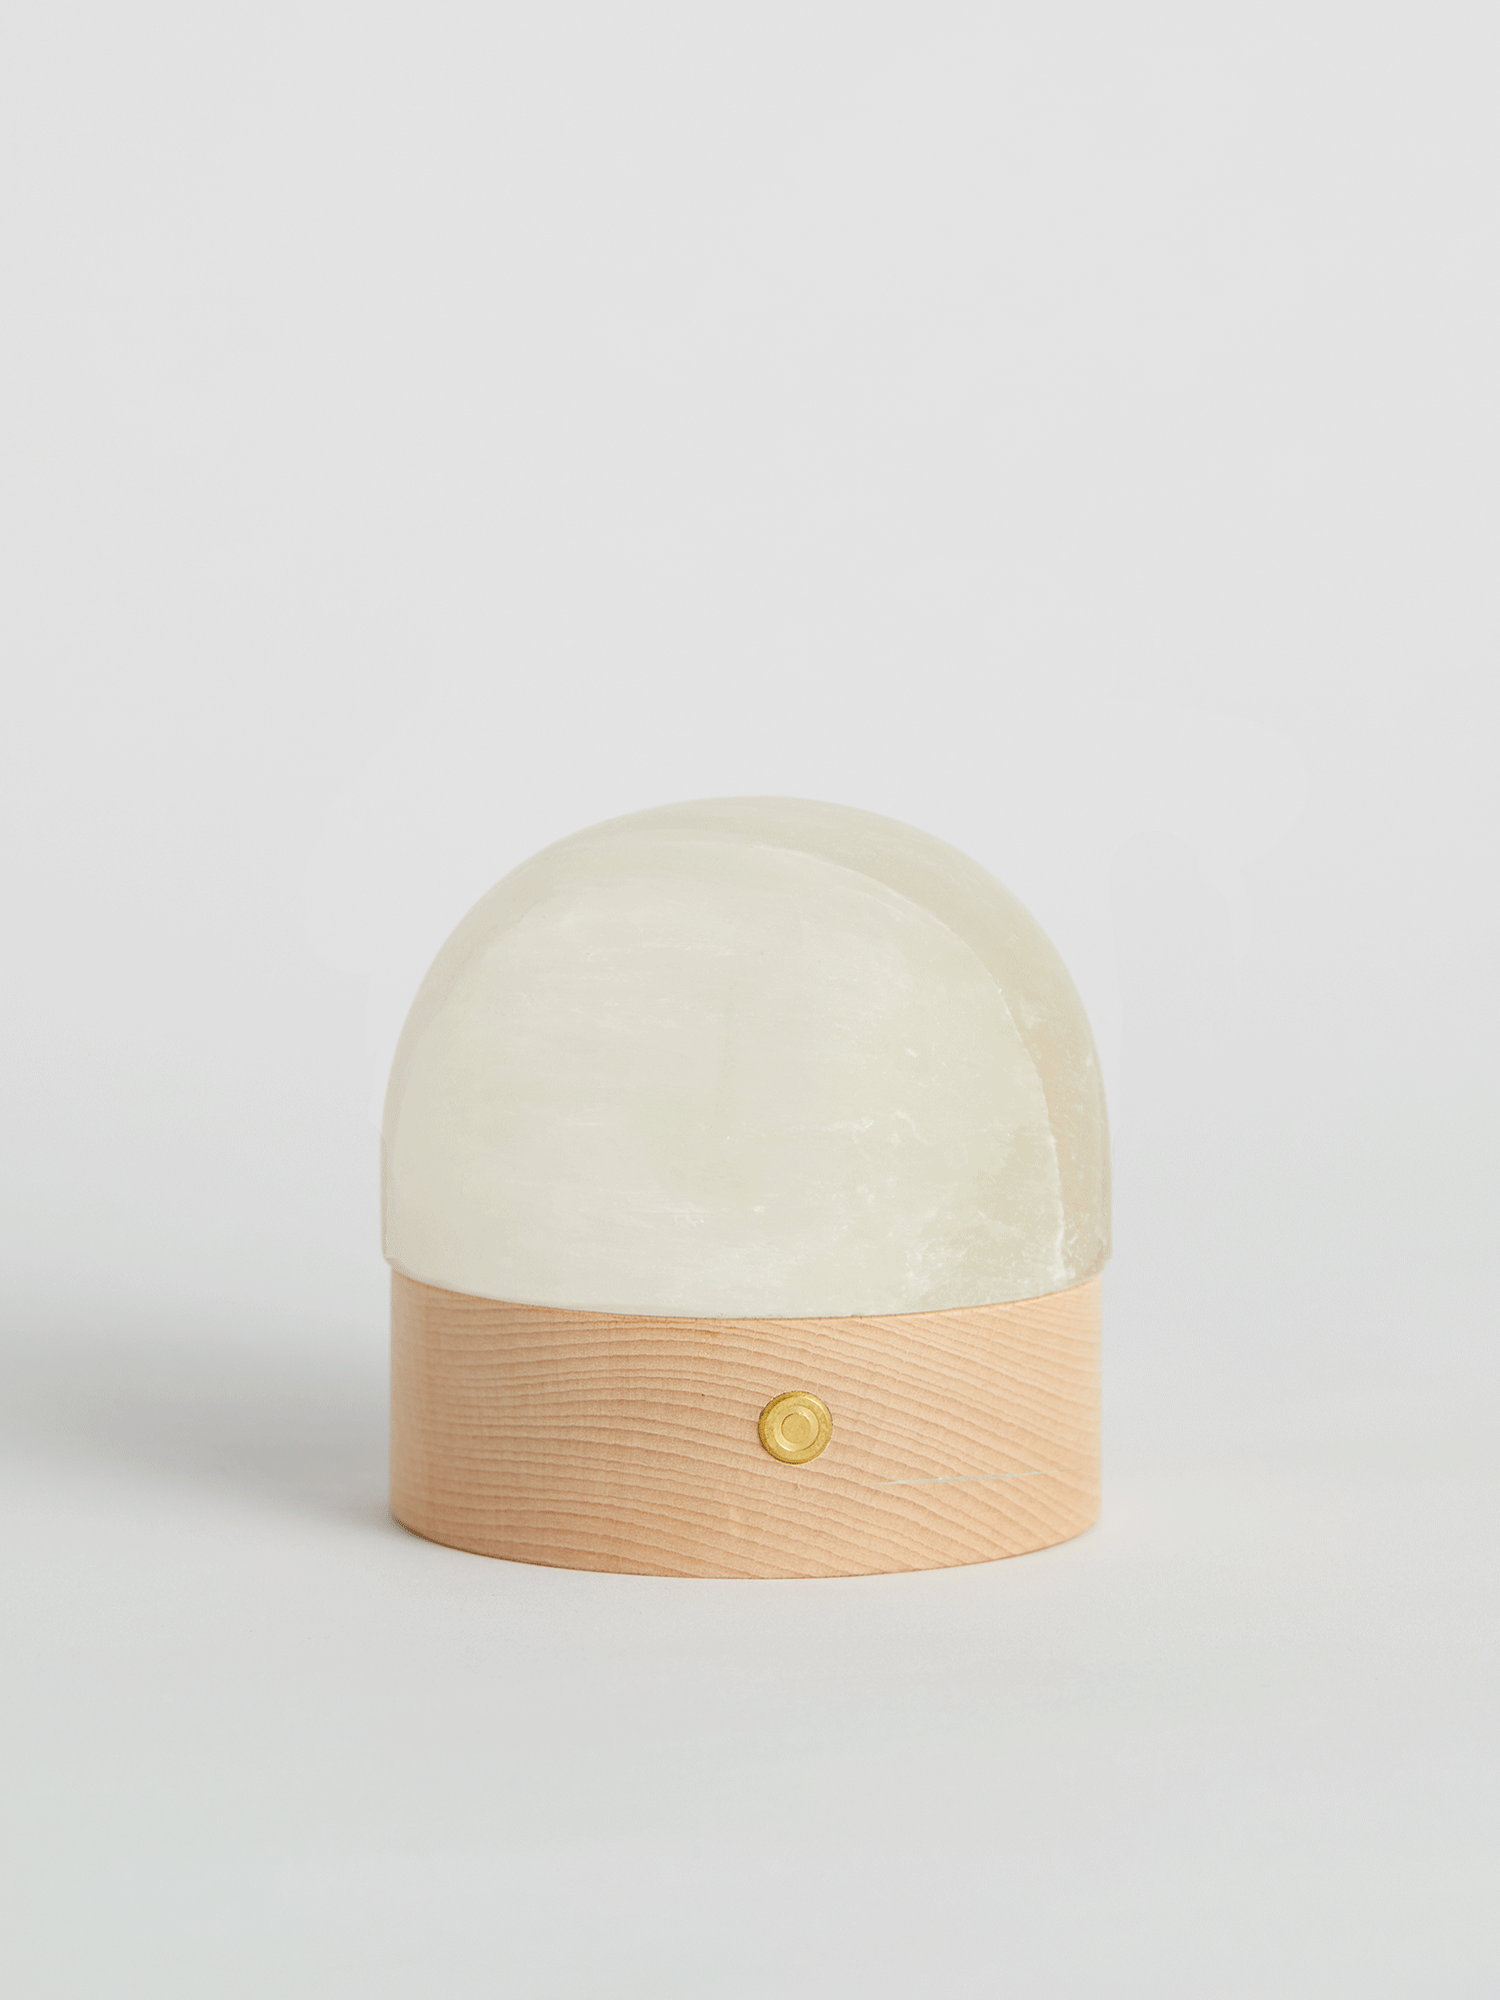 selenite dome light | small